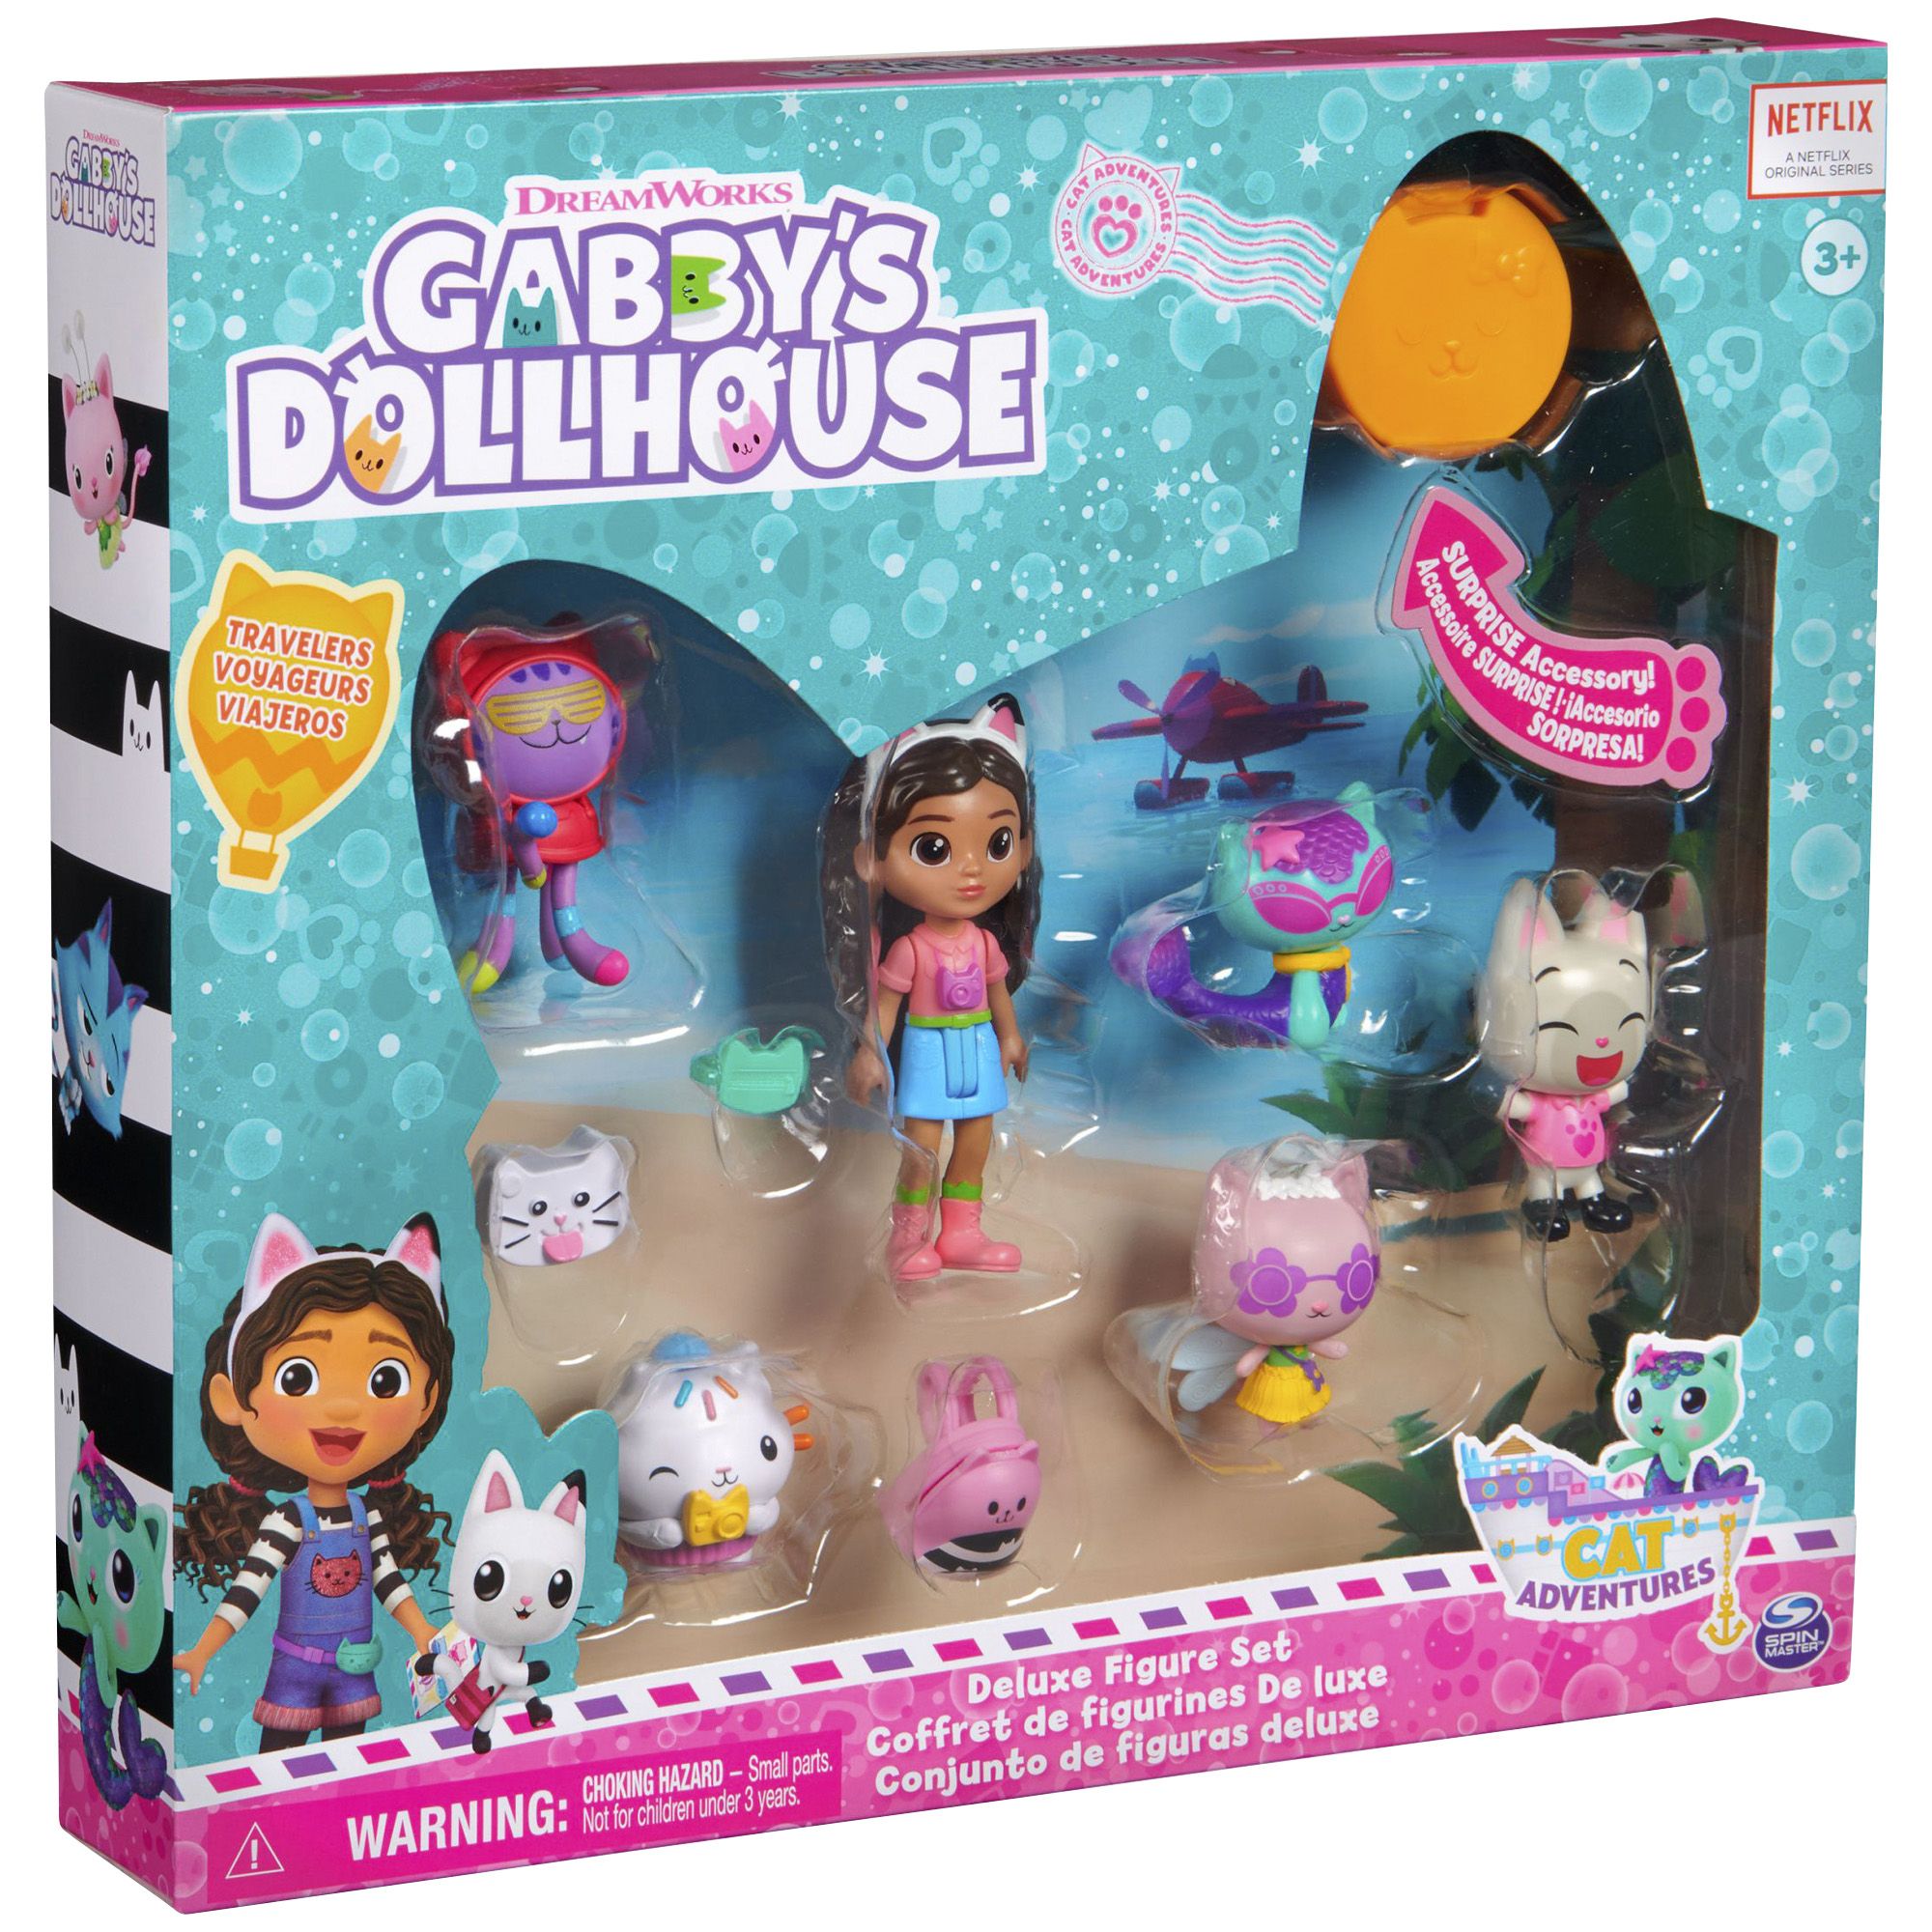 Gabby's Dollhouse, Spin Master